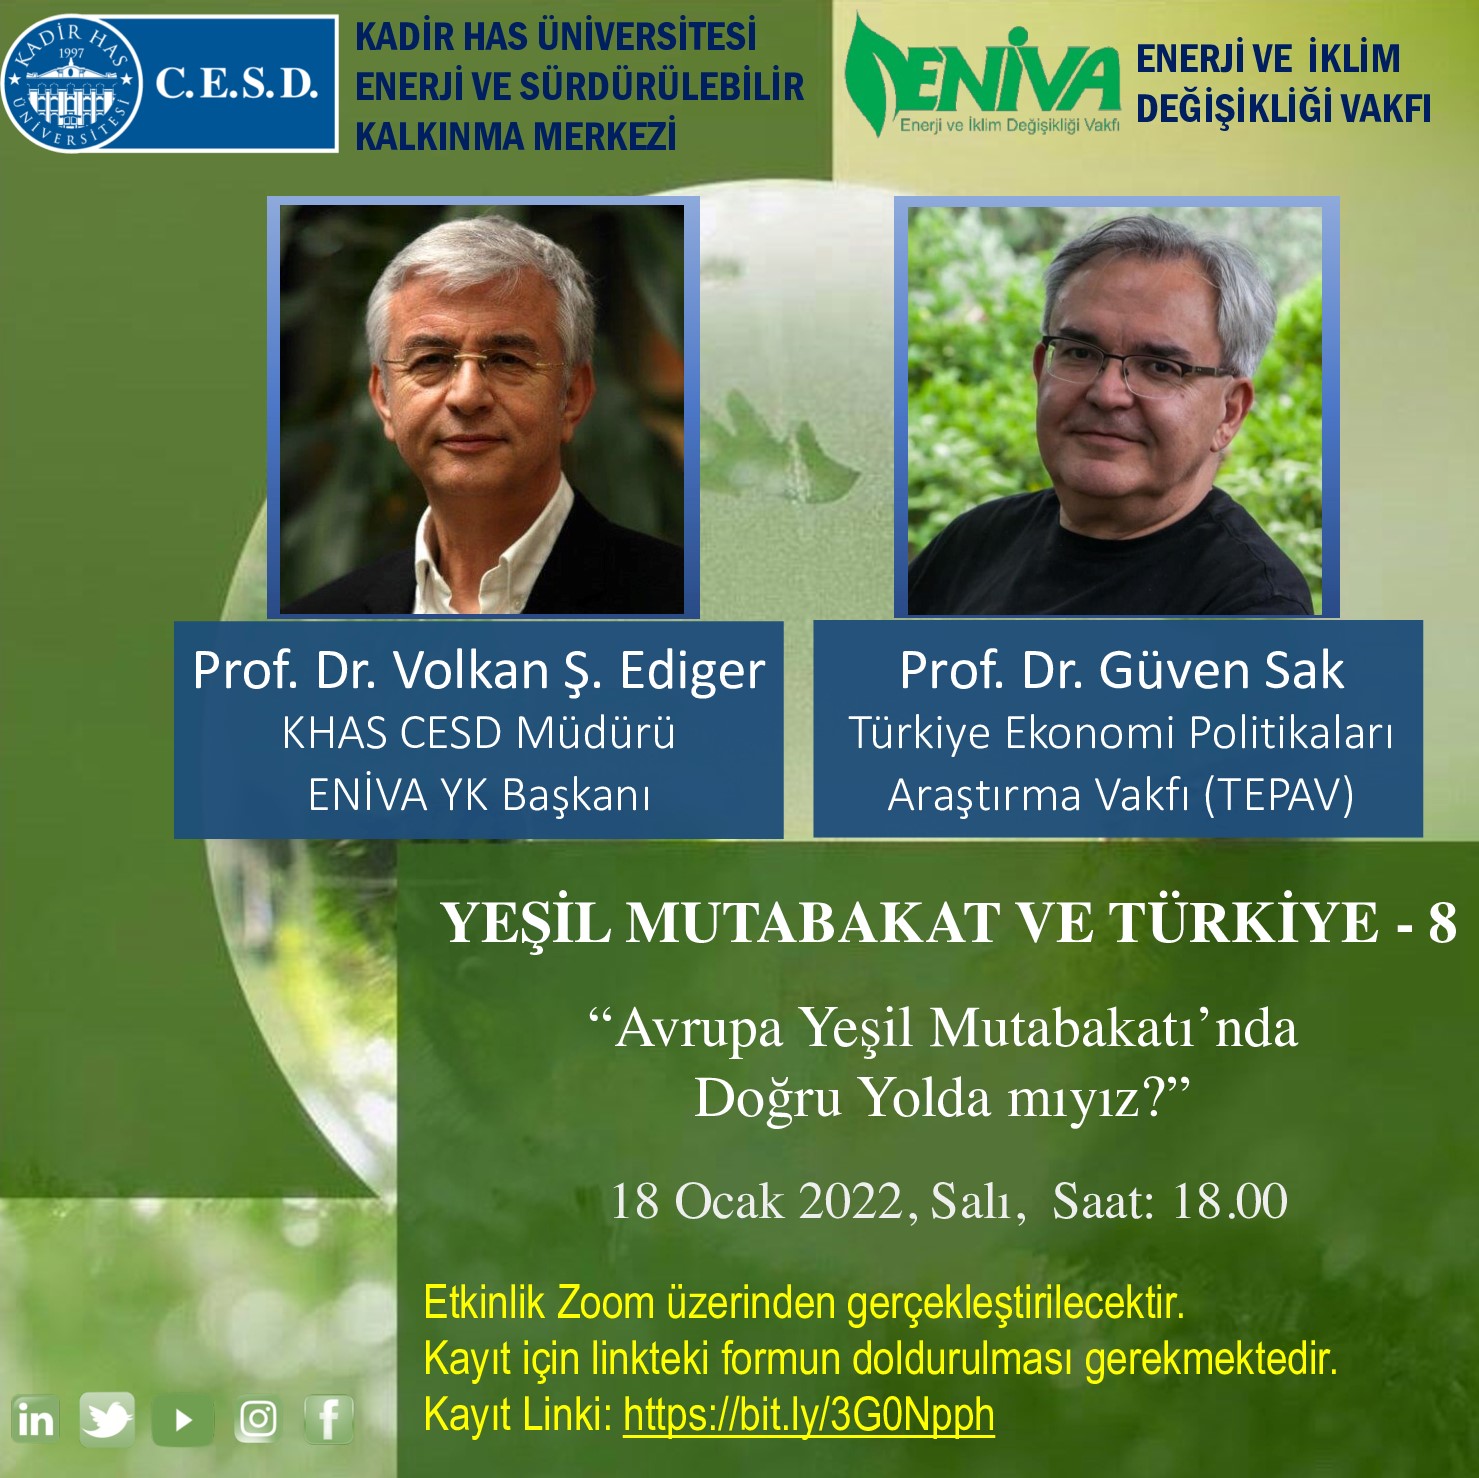 European Green Deal and Turkey-8: Prof. Dr. Güven Sak